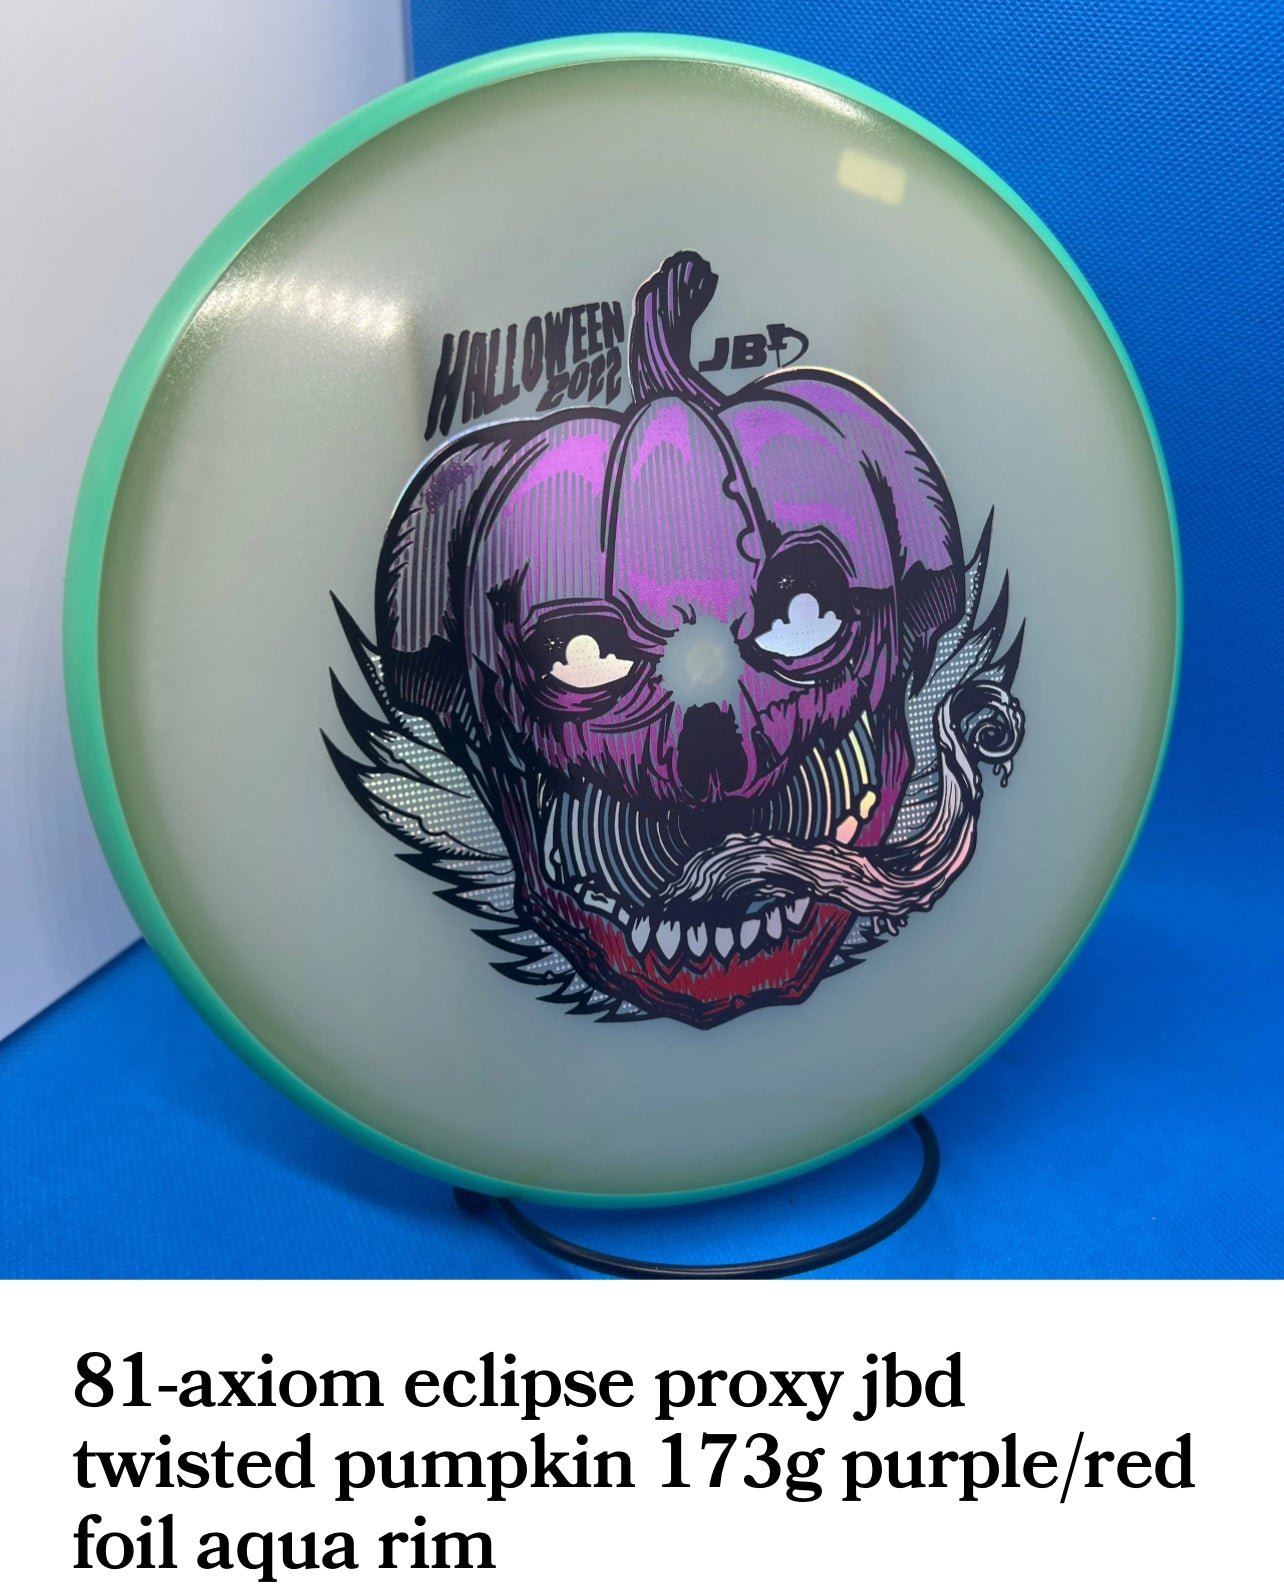 Axiom eclipse proxy’s JBD twisted pumpkin custom stamp